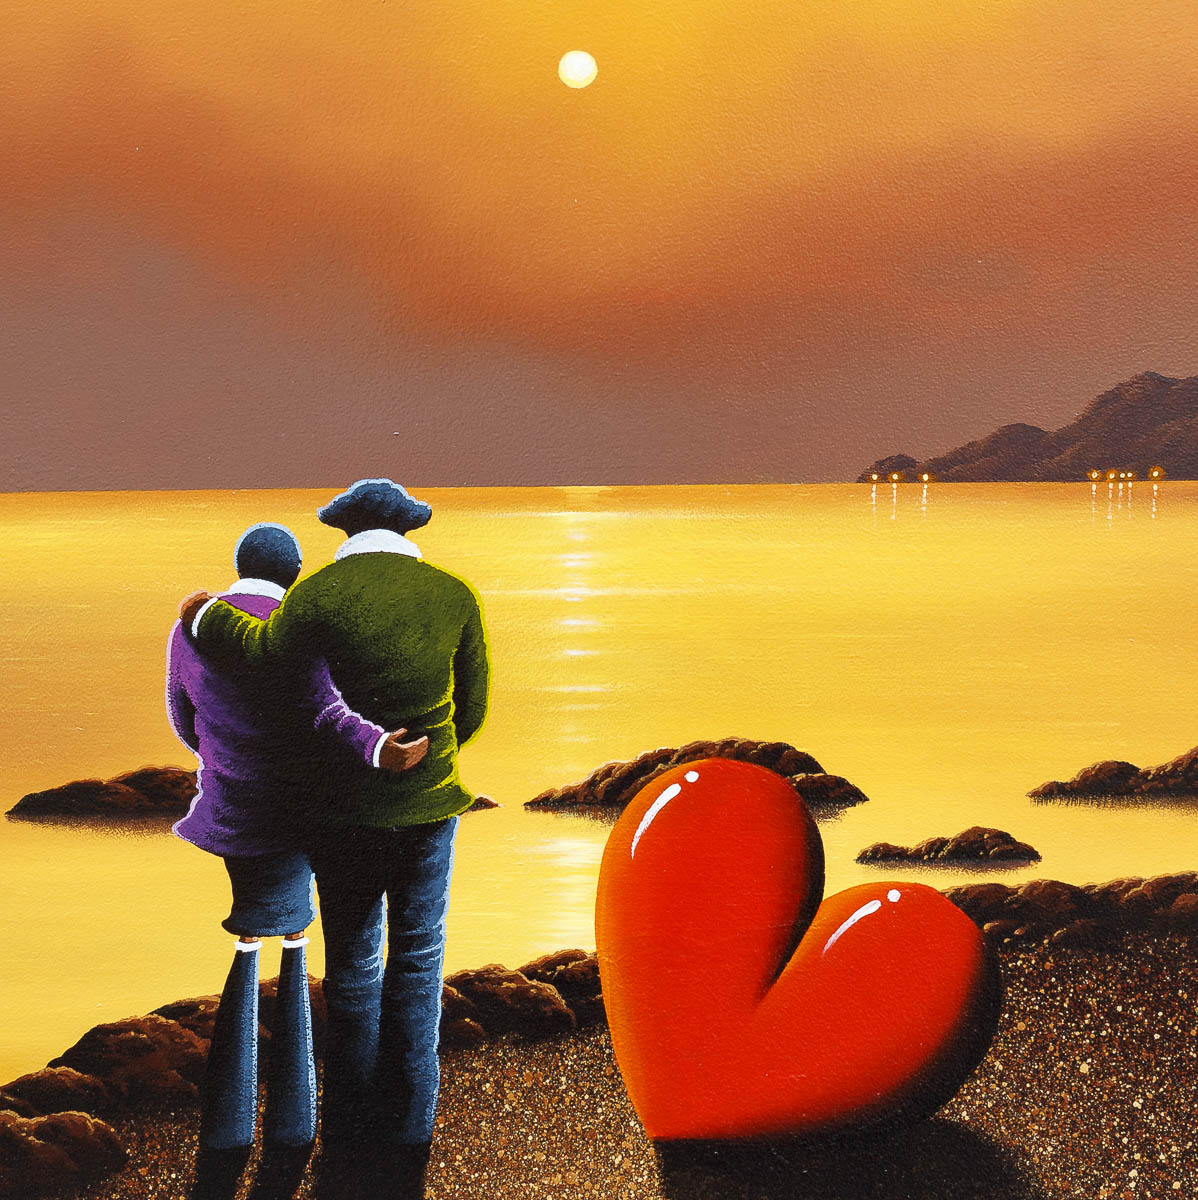 Sunset With My Love - Original David Renshaw Original